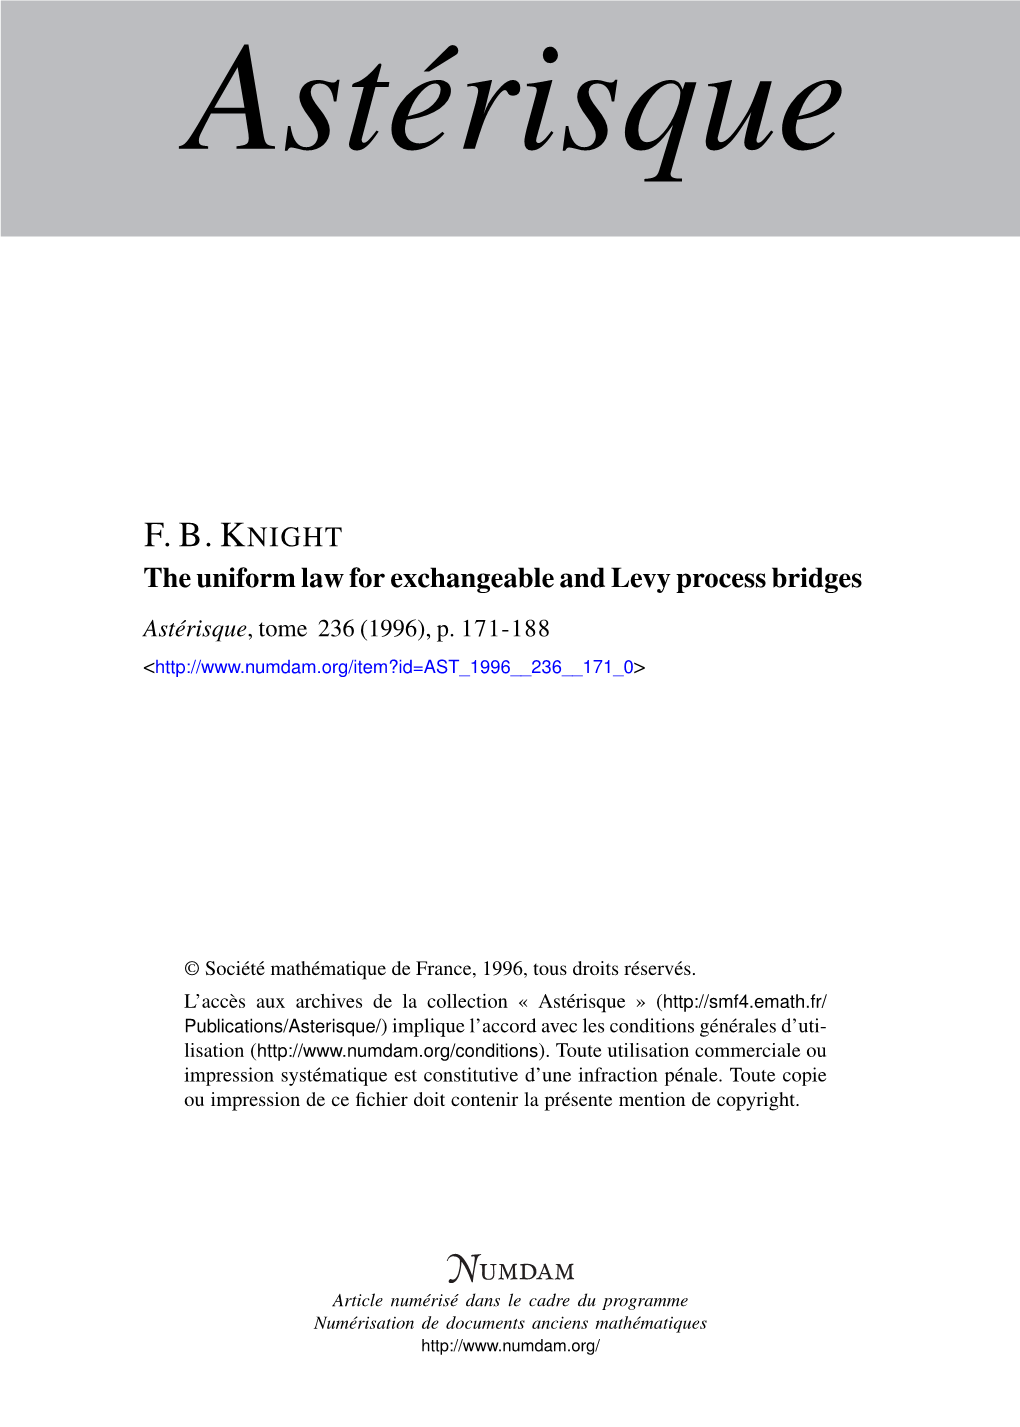 The Uniform Law for Exchangeable and Levy Process Bridges Astérisque, Tome 236 (1996), P